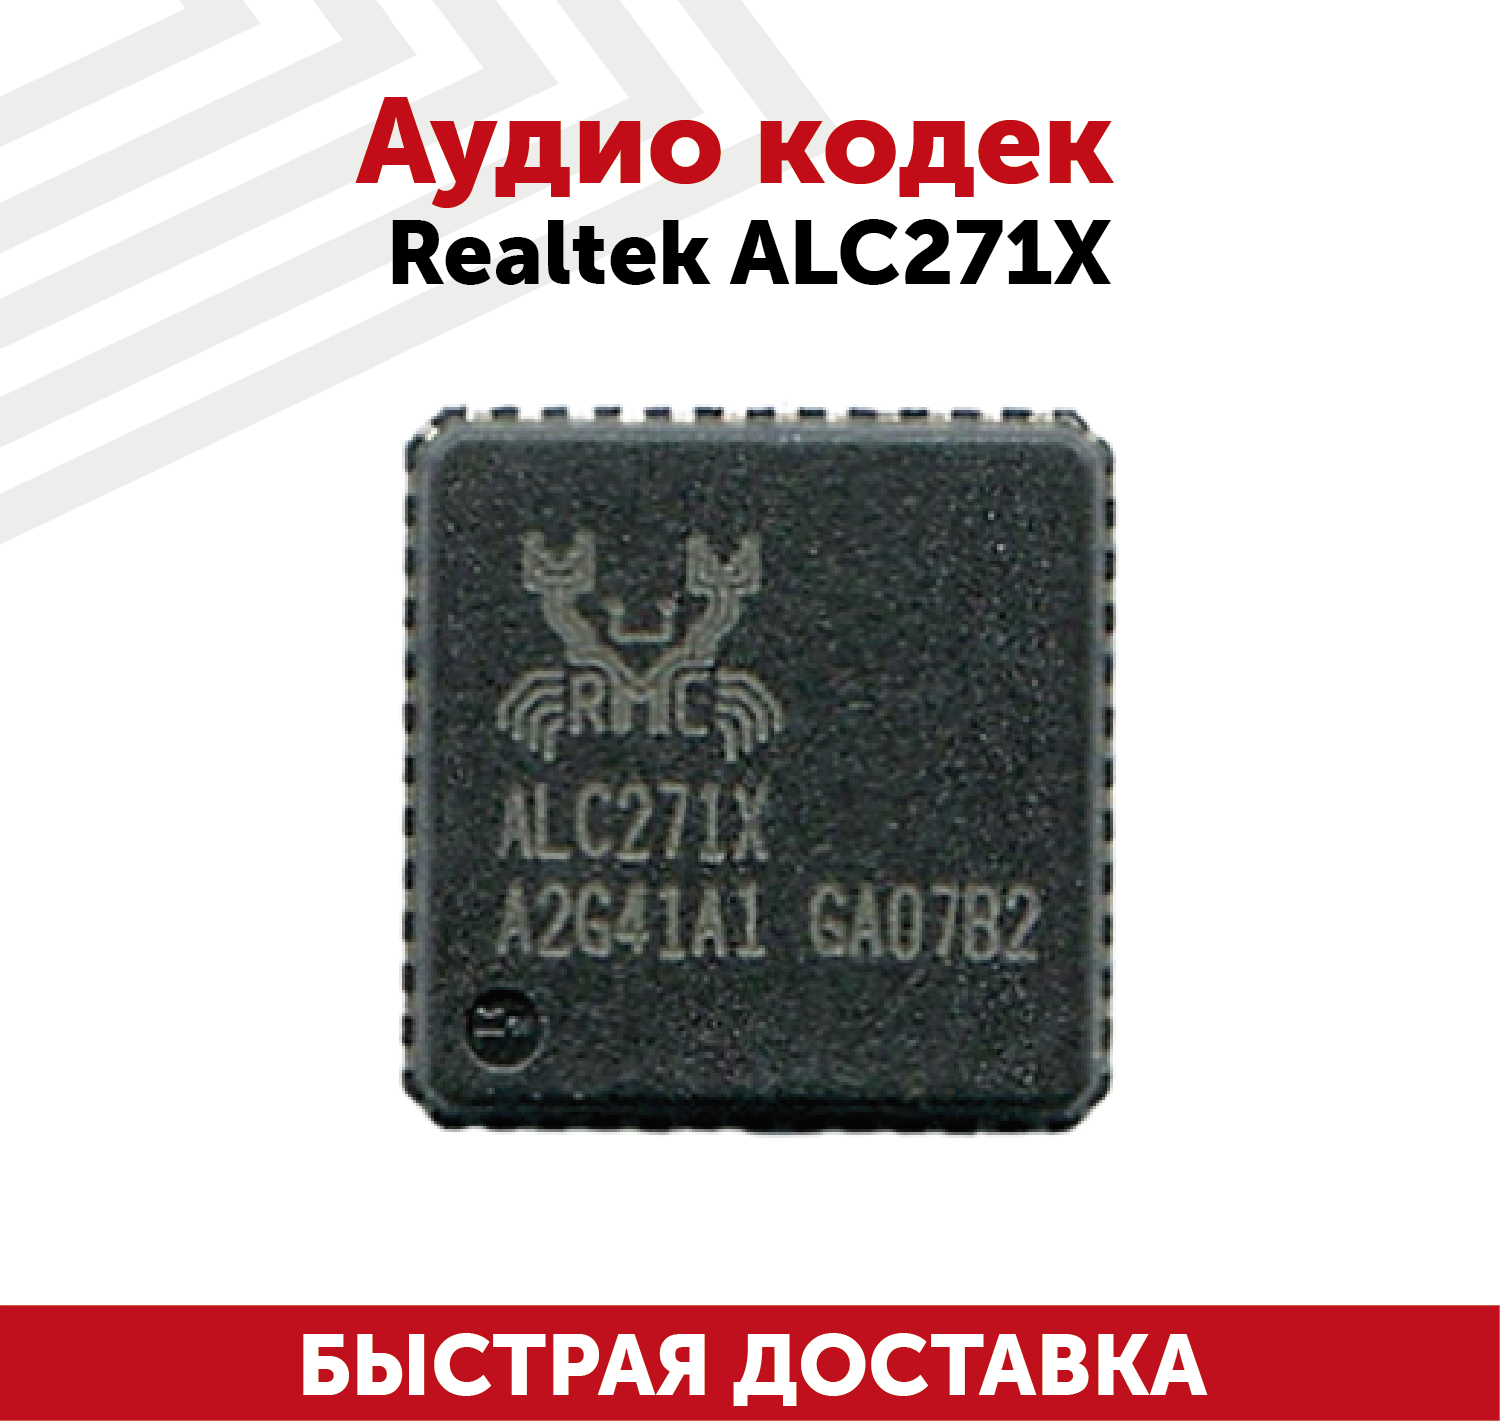 Аудиокодек Realtek ALC271X